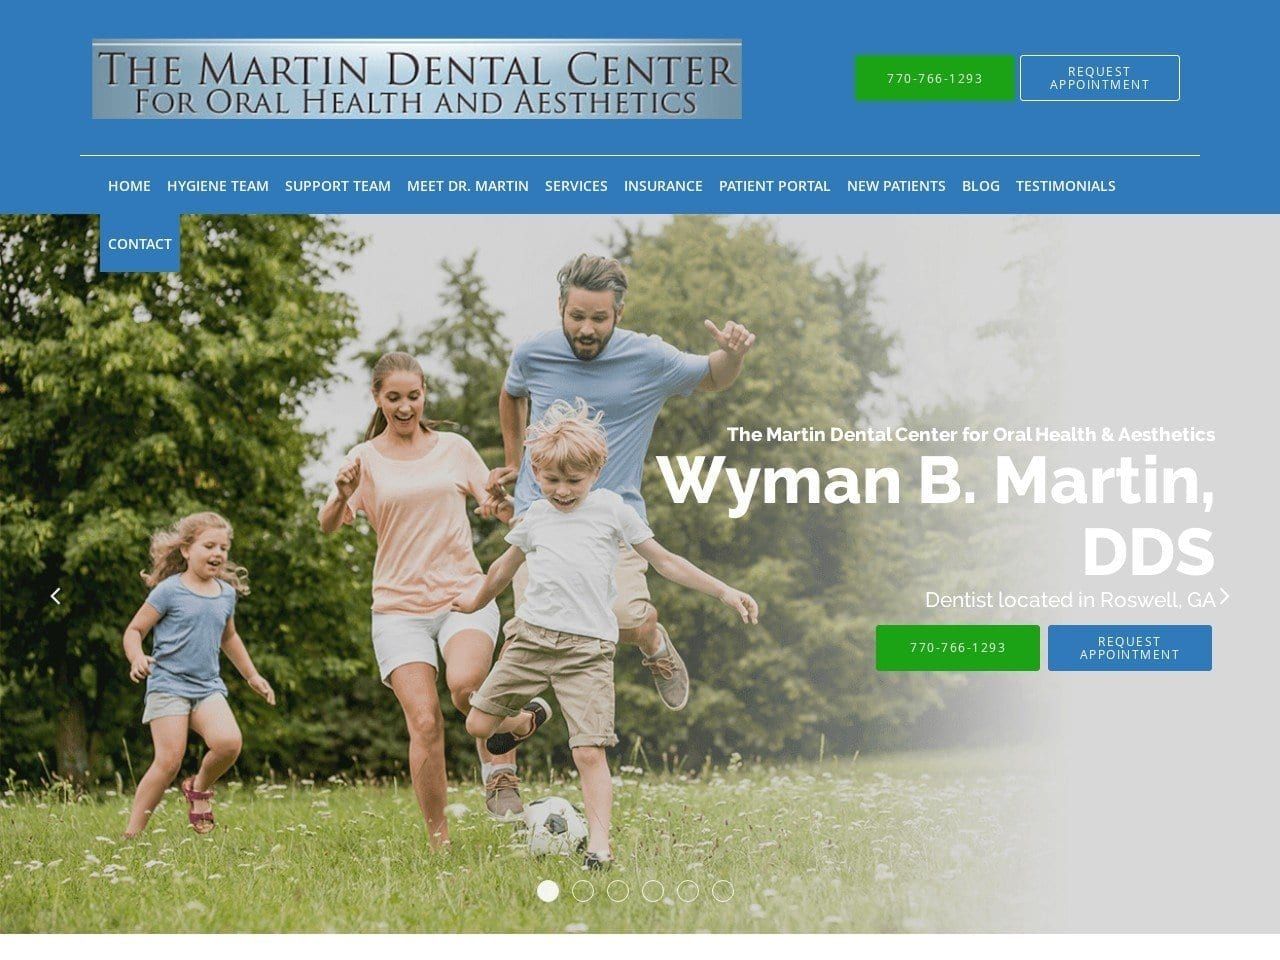 The Martin Dental Center Website Screenshot from themartindentalcenter.com